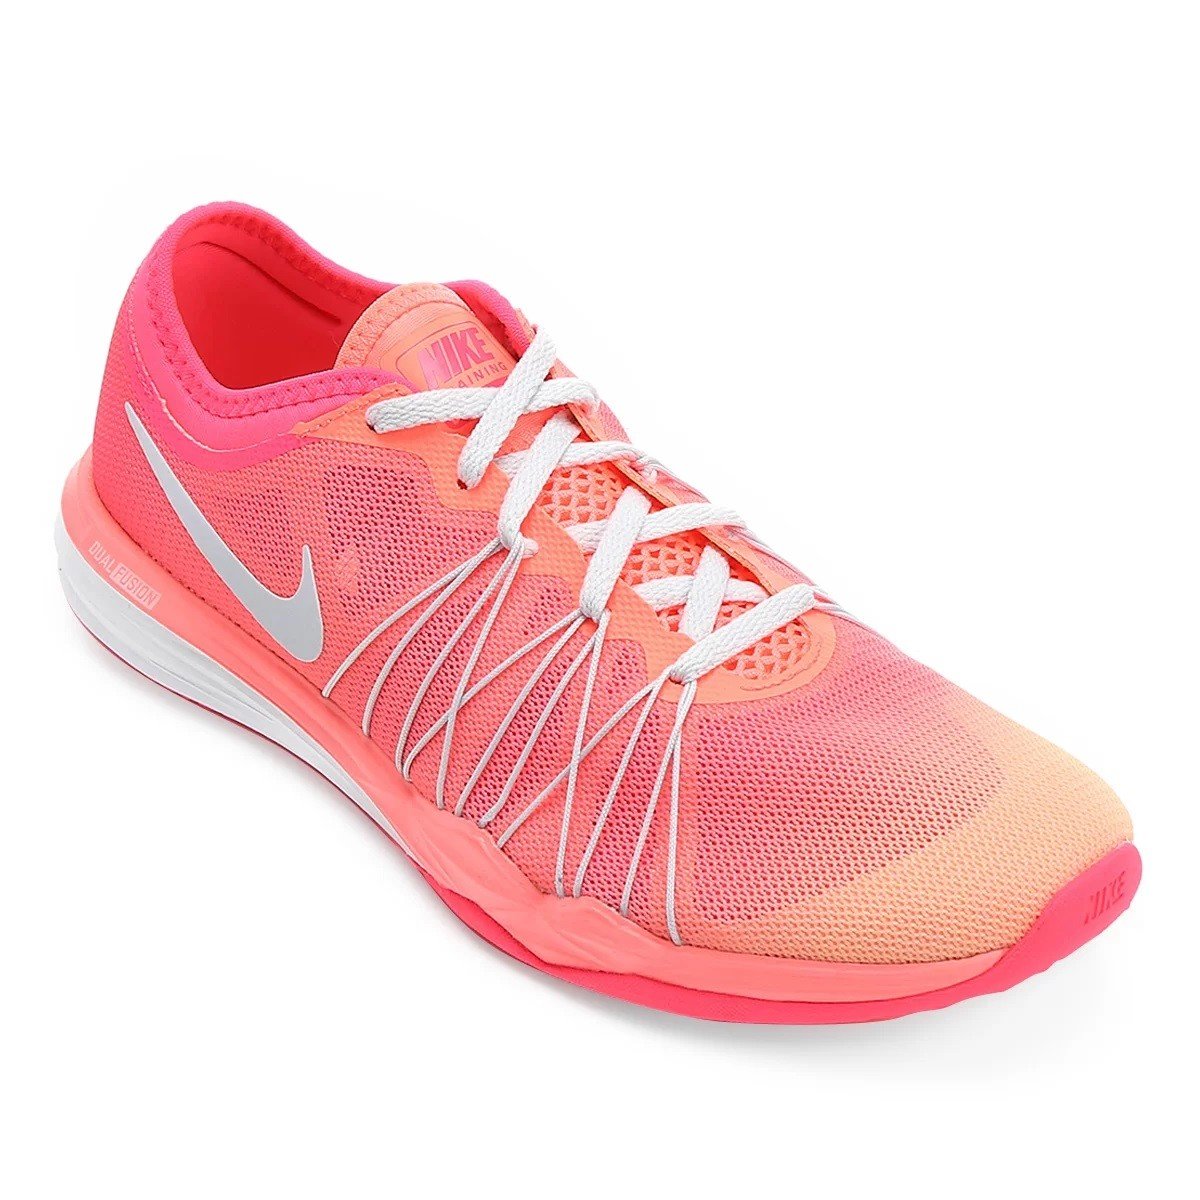 Zapatilla Nike Dual Tr Hit Fade 898469-600 Sports